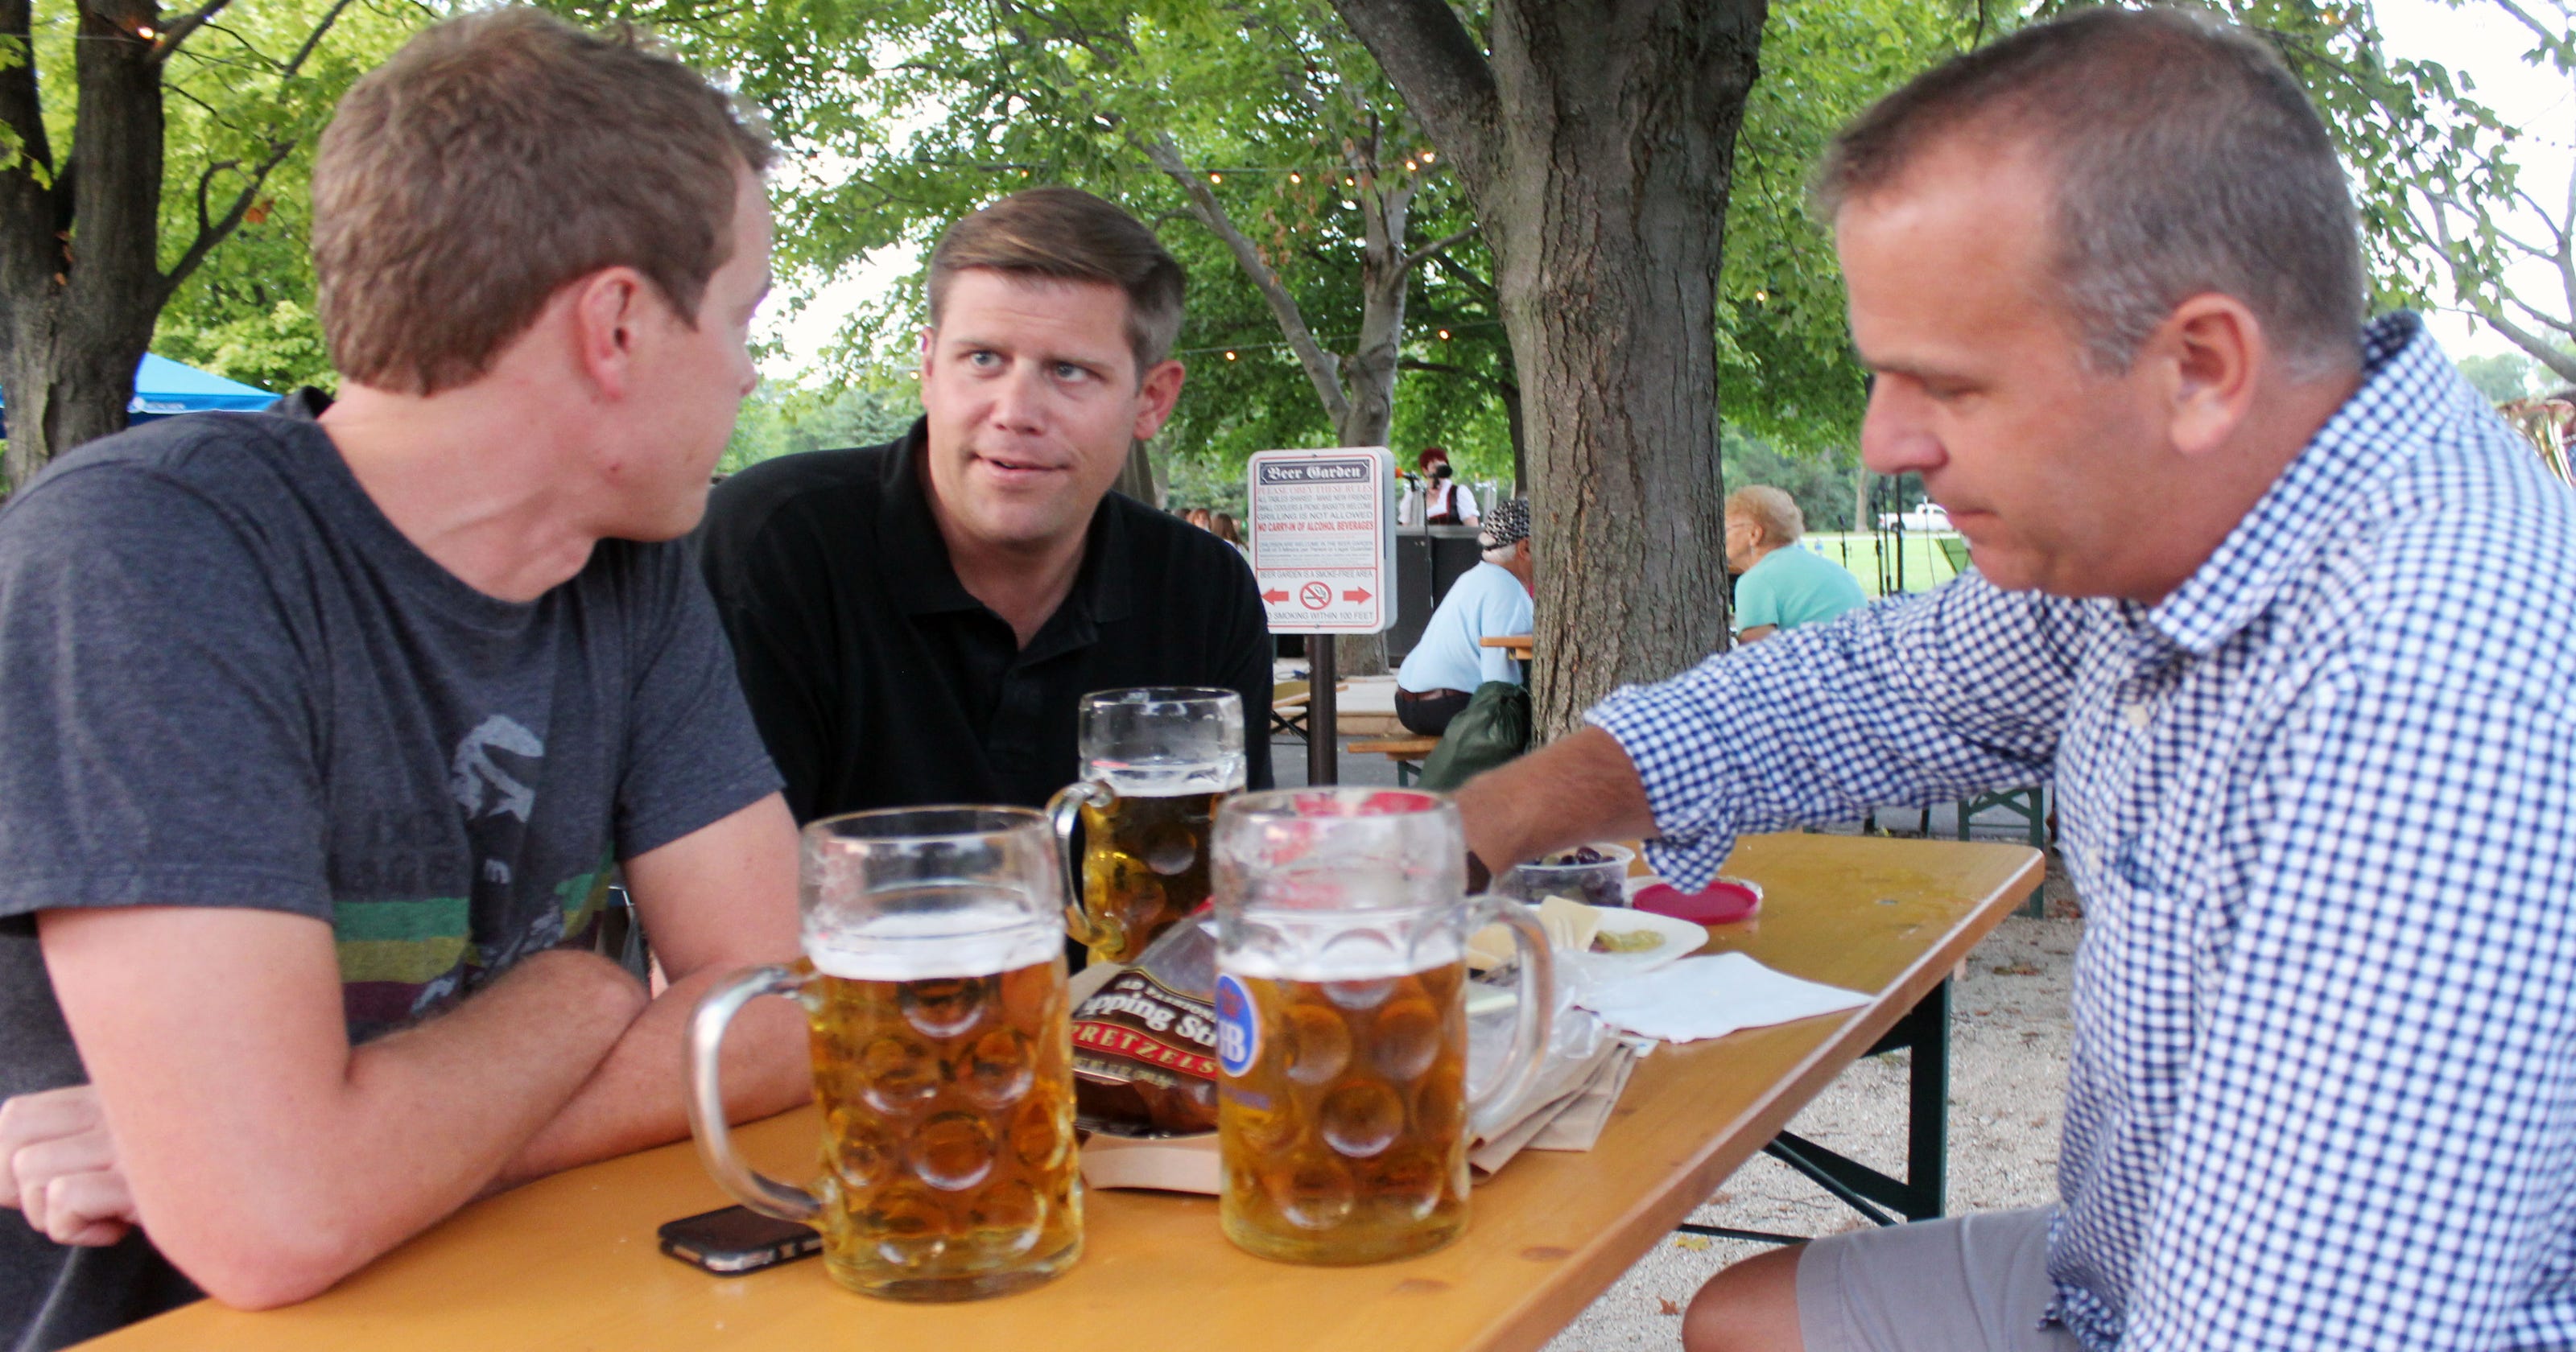 Beer Gardens Return To Milwaukee Parks